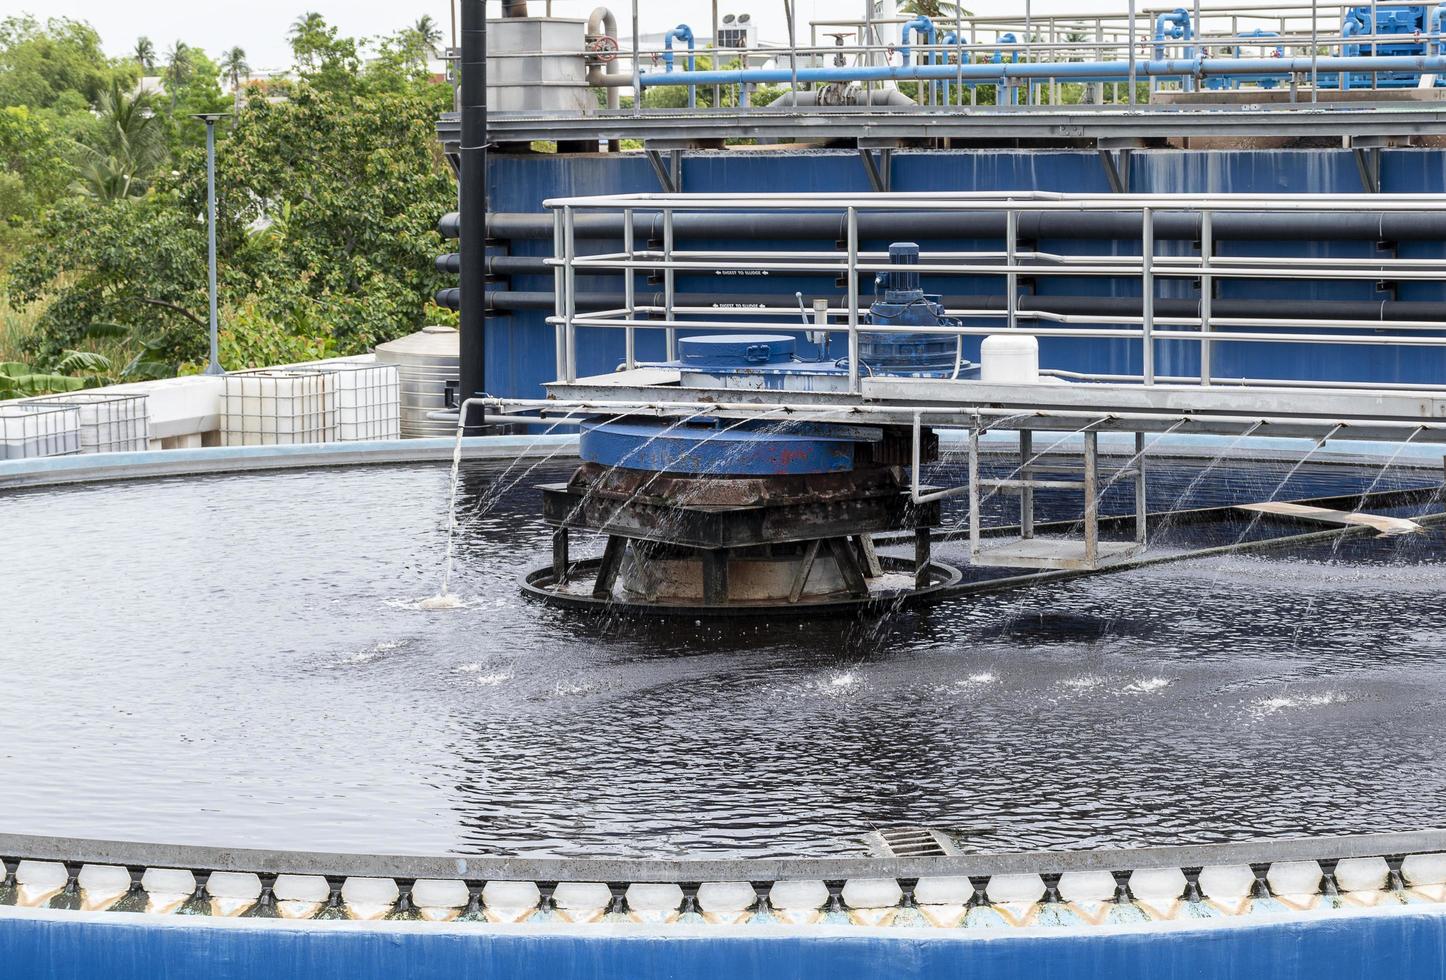 lagoas de tratamento de águas residuais de plantas industriais foto